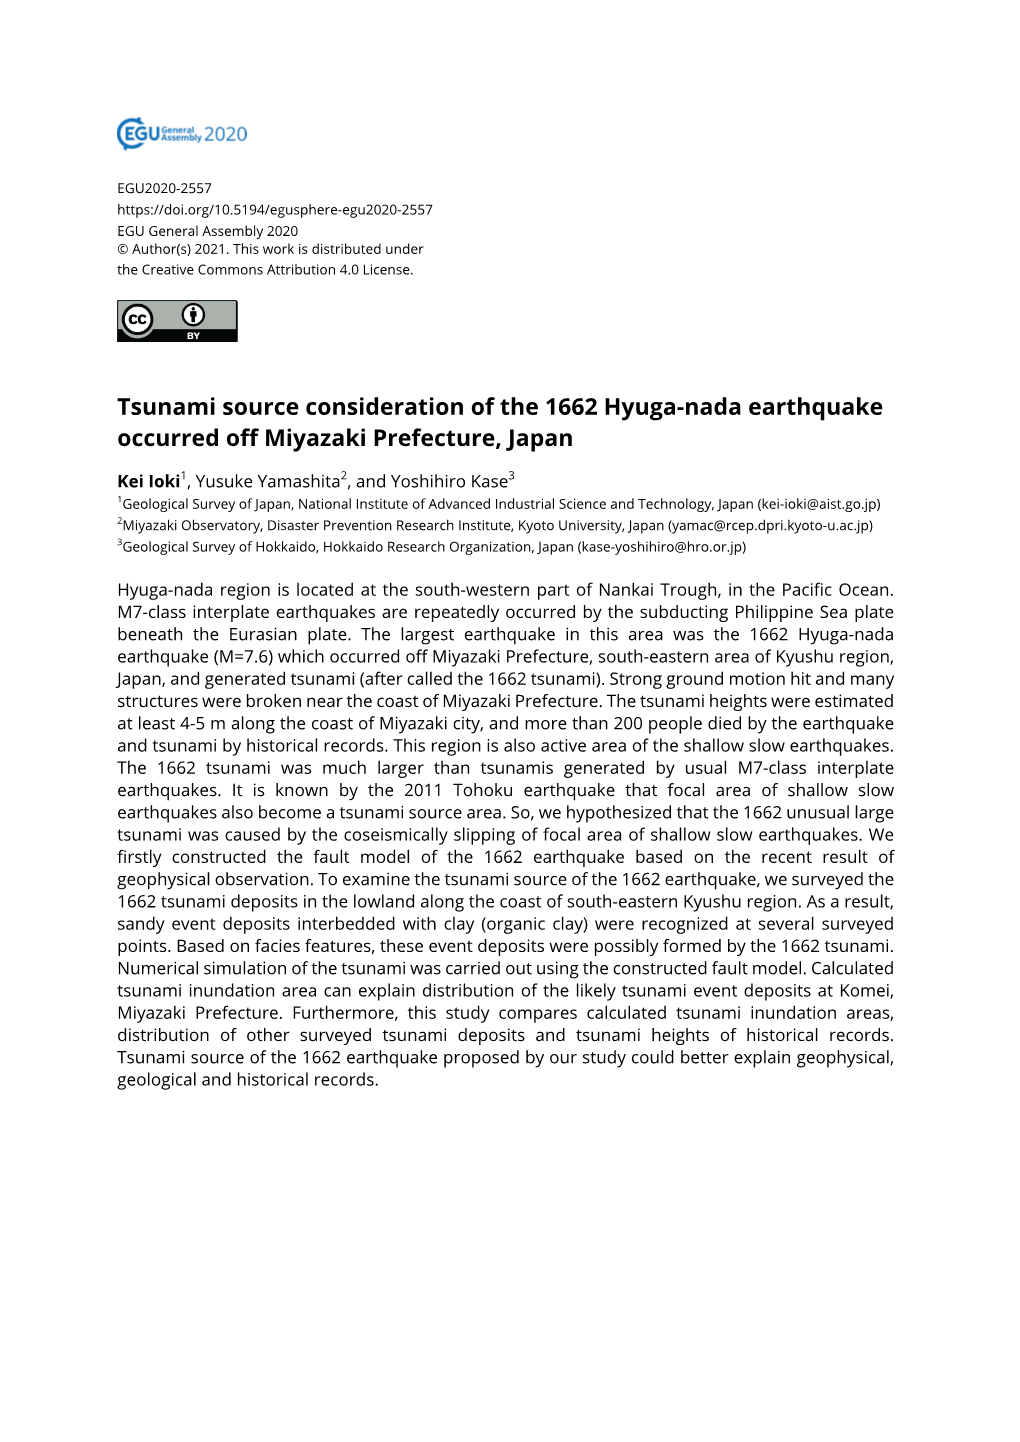 Tsunami Source Consideration of the 1662 Hyuga-Nada Earthquake Occurred Off Miyazaki Prefecture, Japan